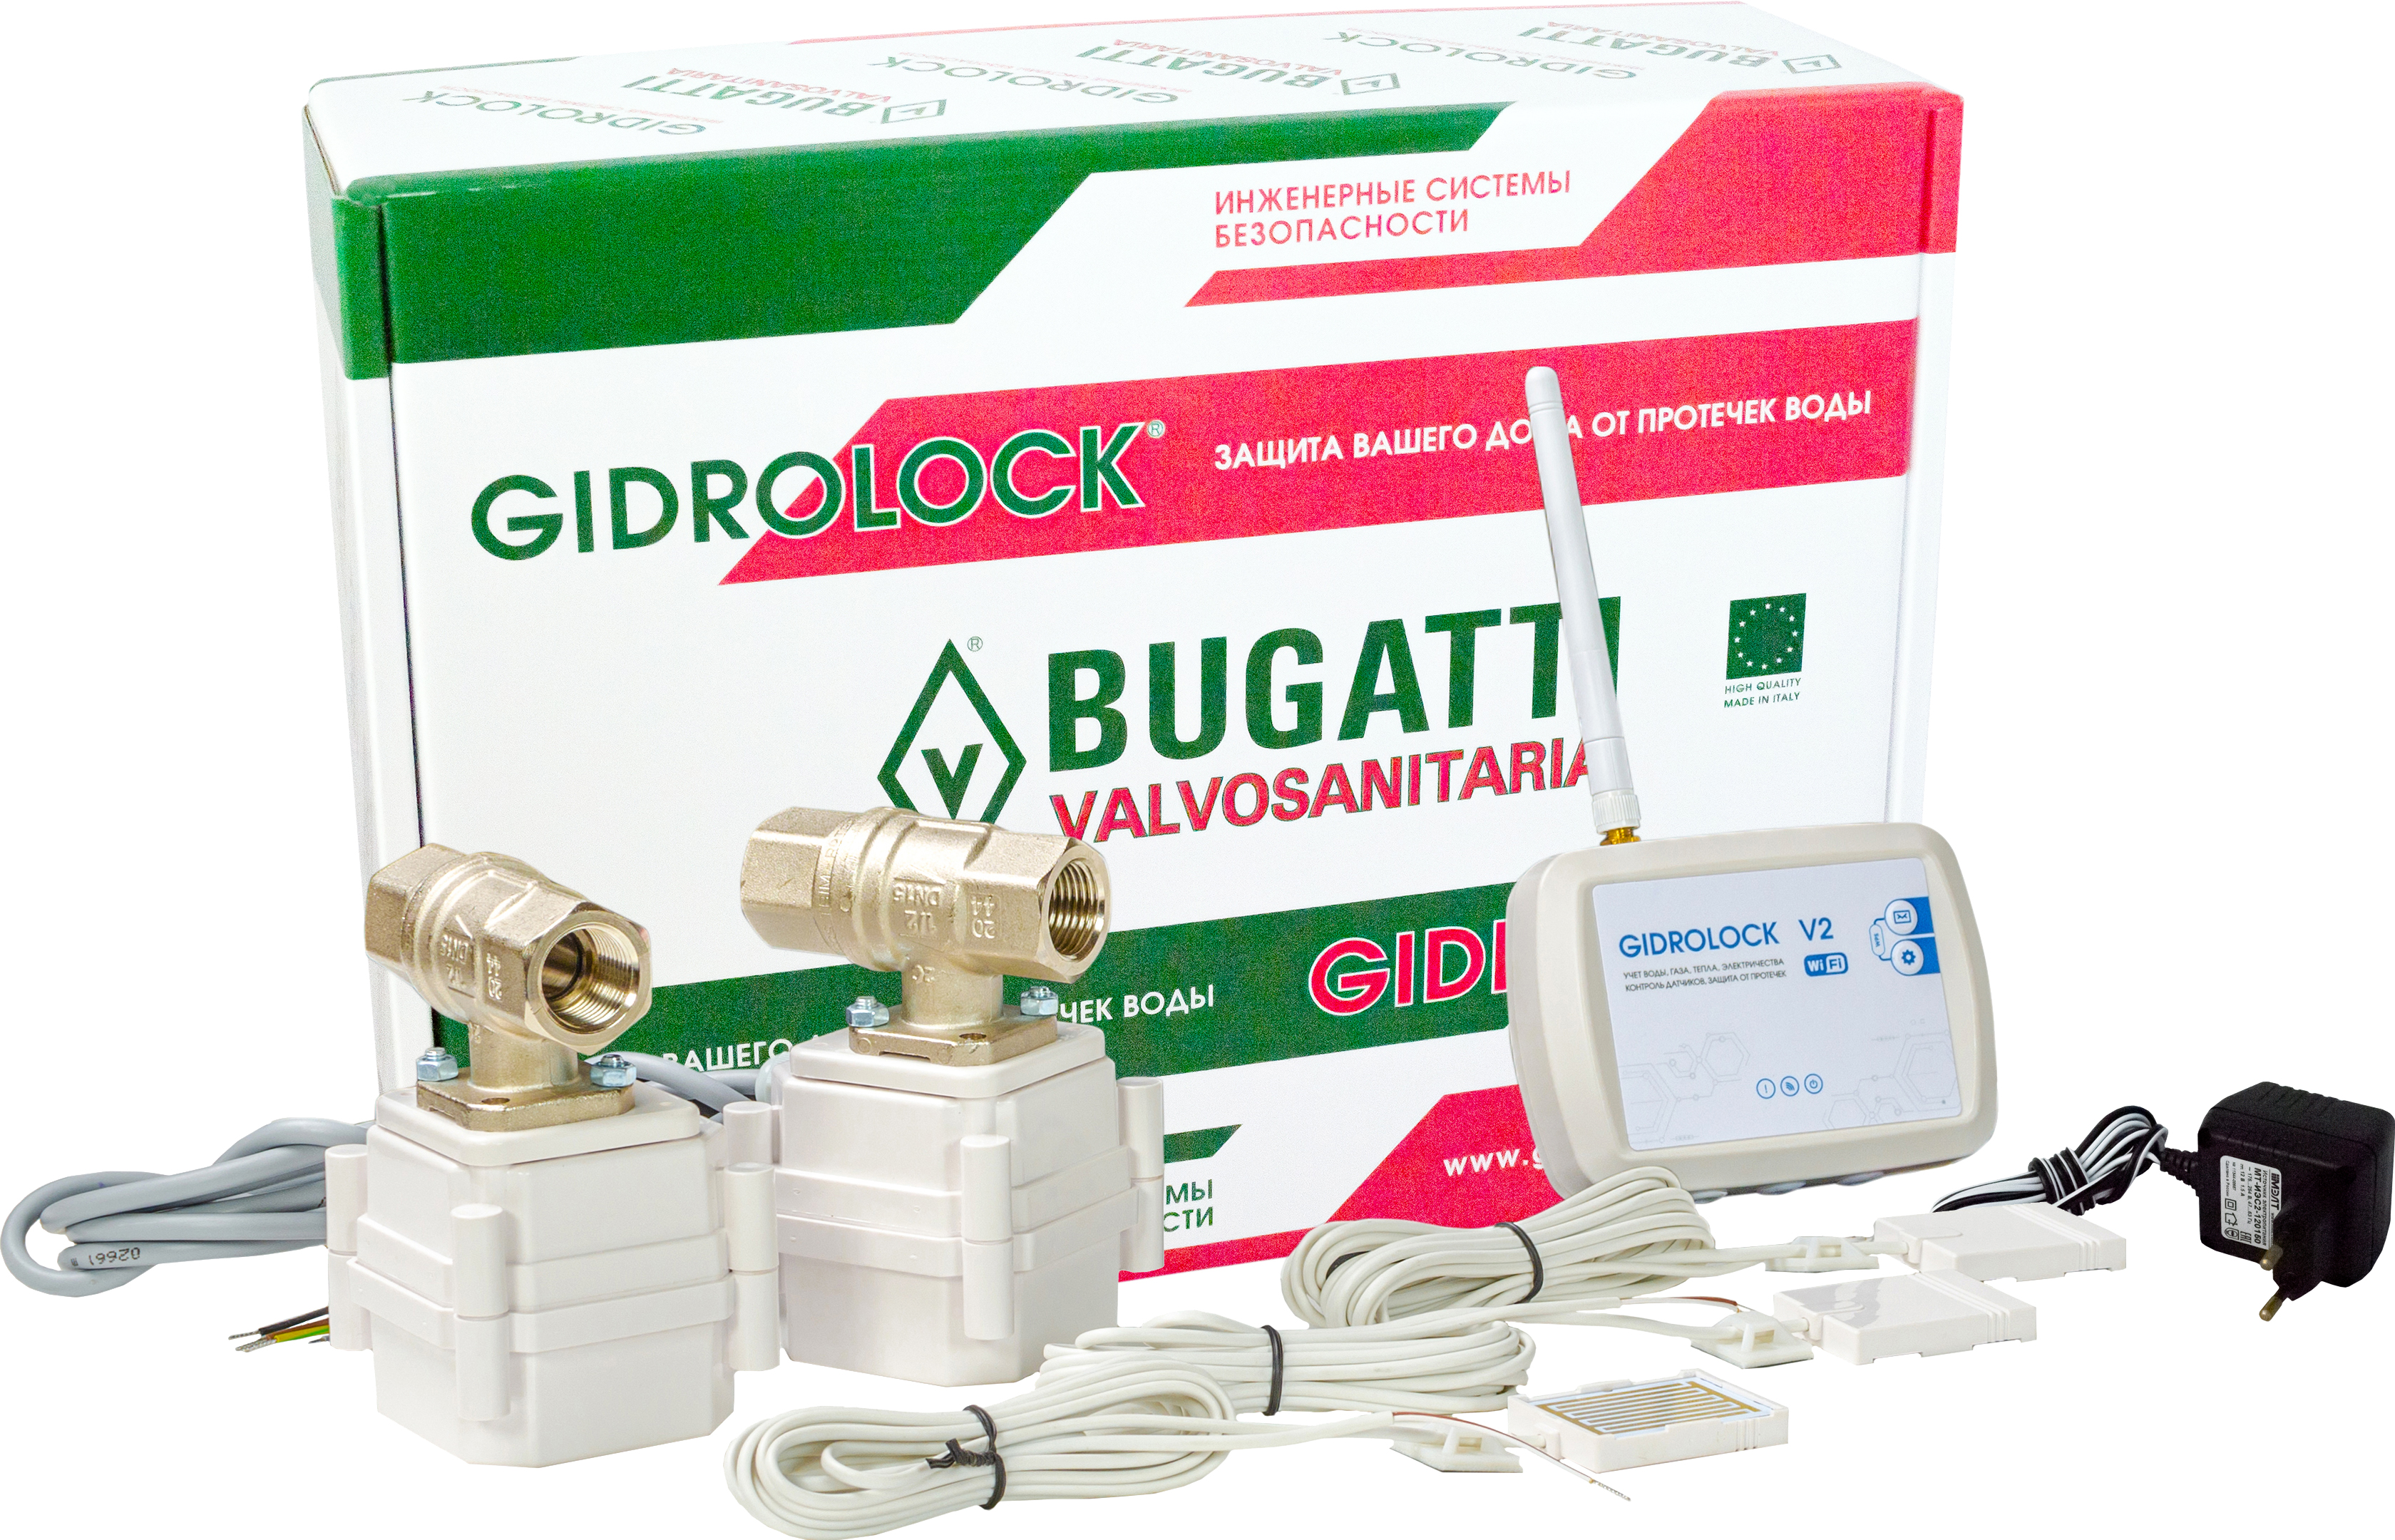 Gidrolock bugatti 1 2. Комплект Gidrolock WIFI Bugatti 1/2. Система защиты от протечек воды Gidrolock Premium Bugatti 1/2. Gidrolock система Bugatti. Gidrolock Bugatti защита от протечек.